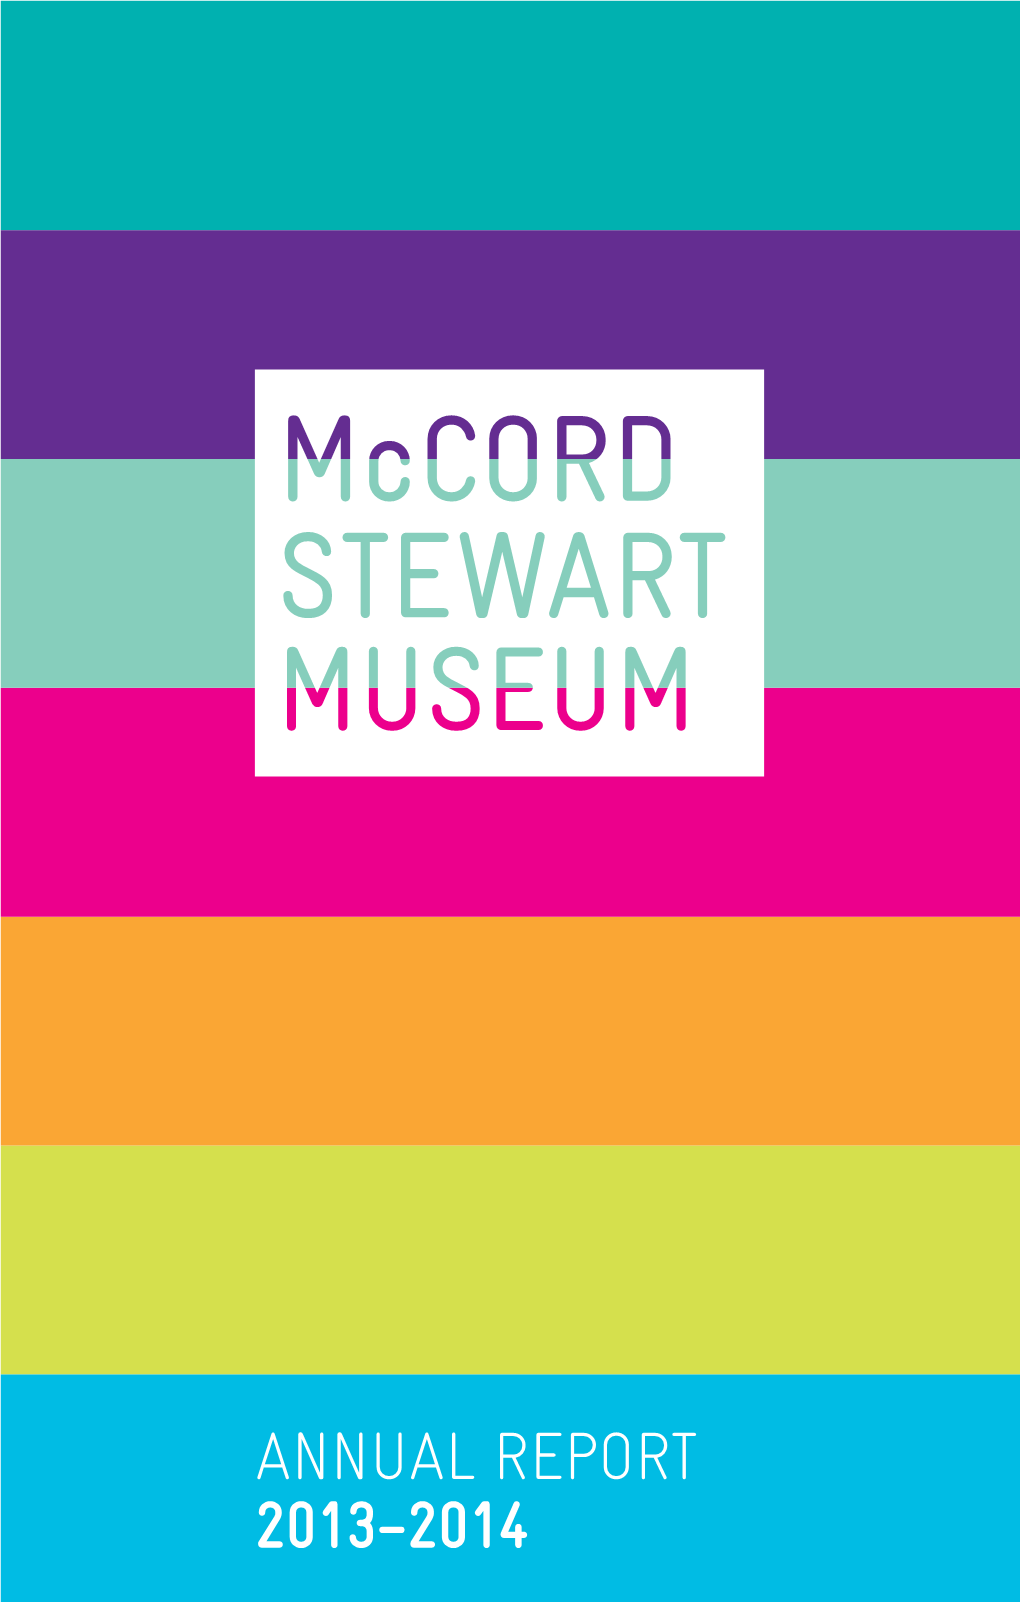 2013-2014 Annual Report, Mccord Stewart Museum